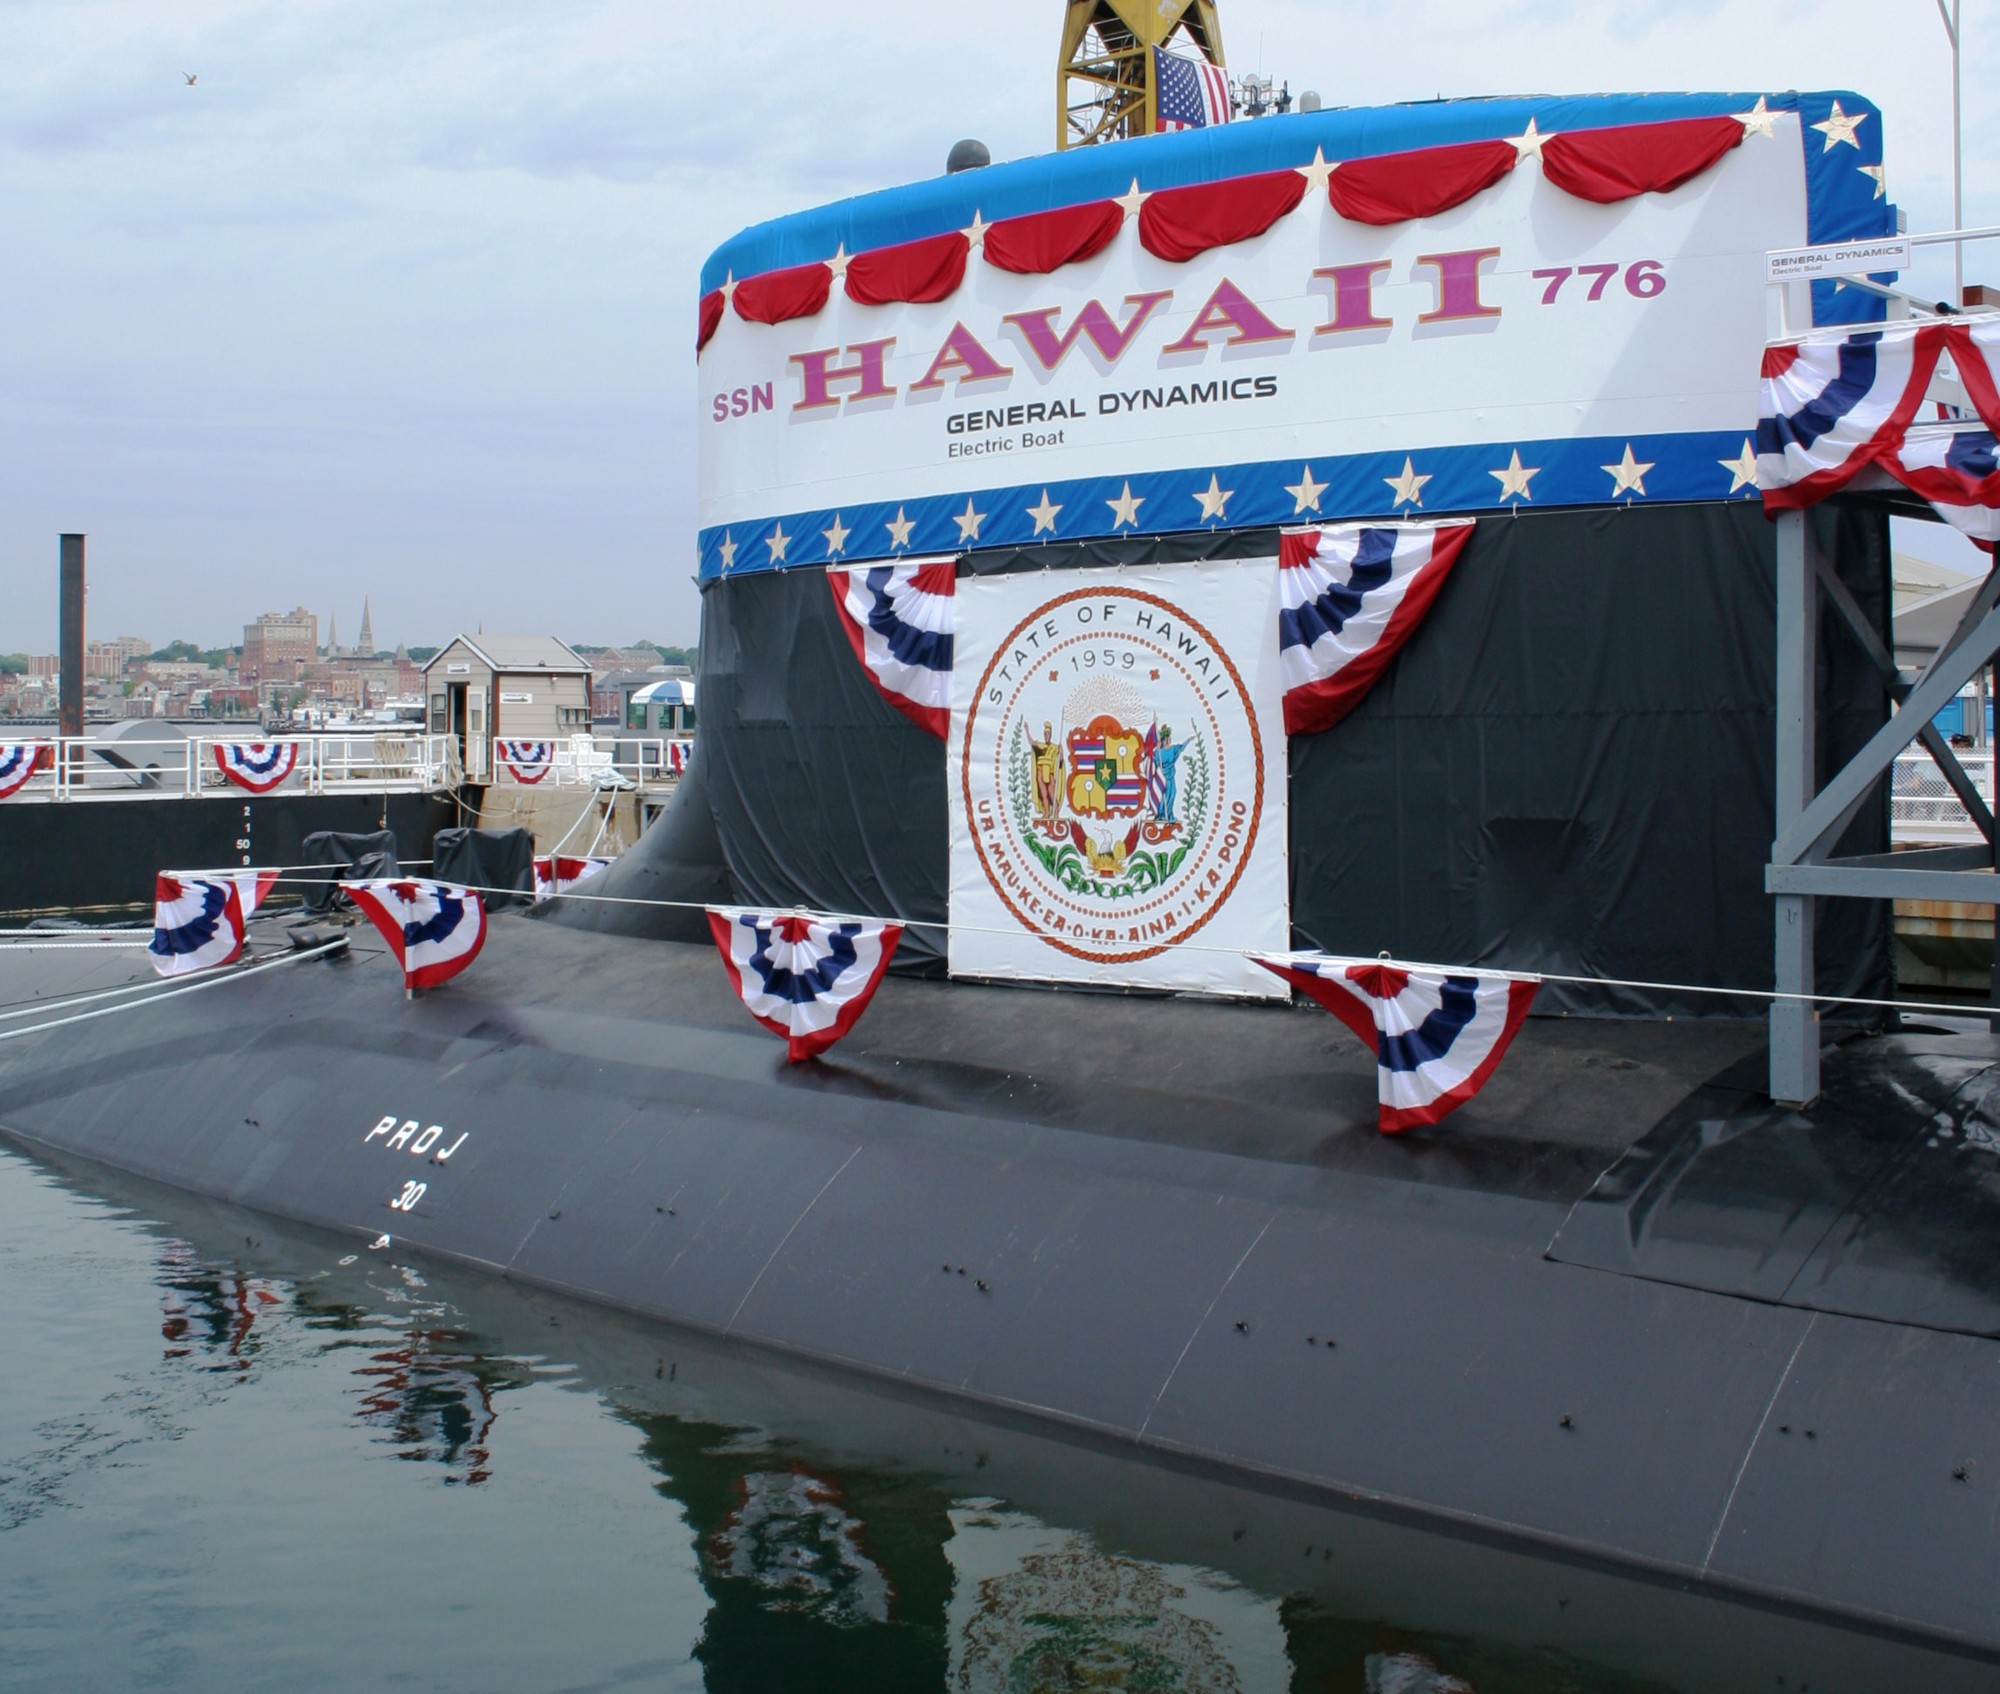 ssn-776 uss hawaii virginia class attack submarine us navy 2006 48 christening ceremony groton connecticut